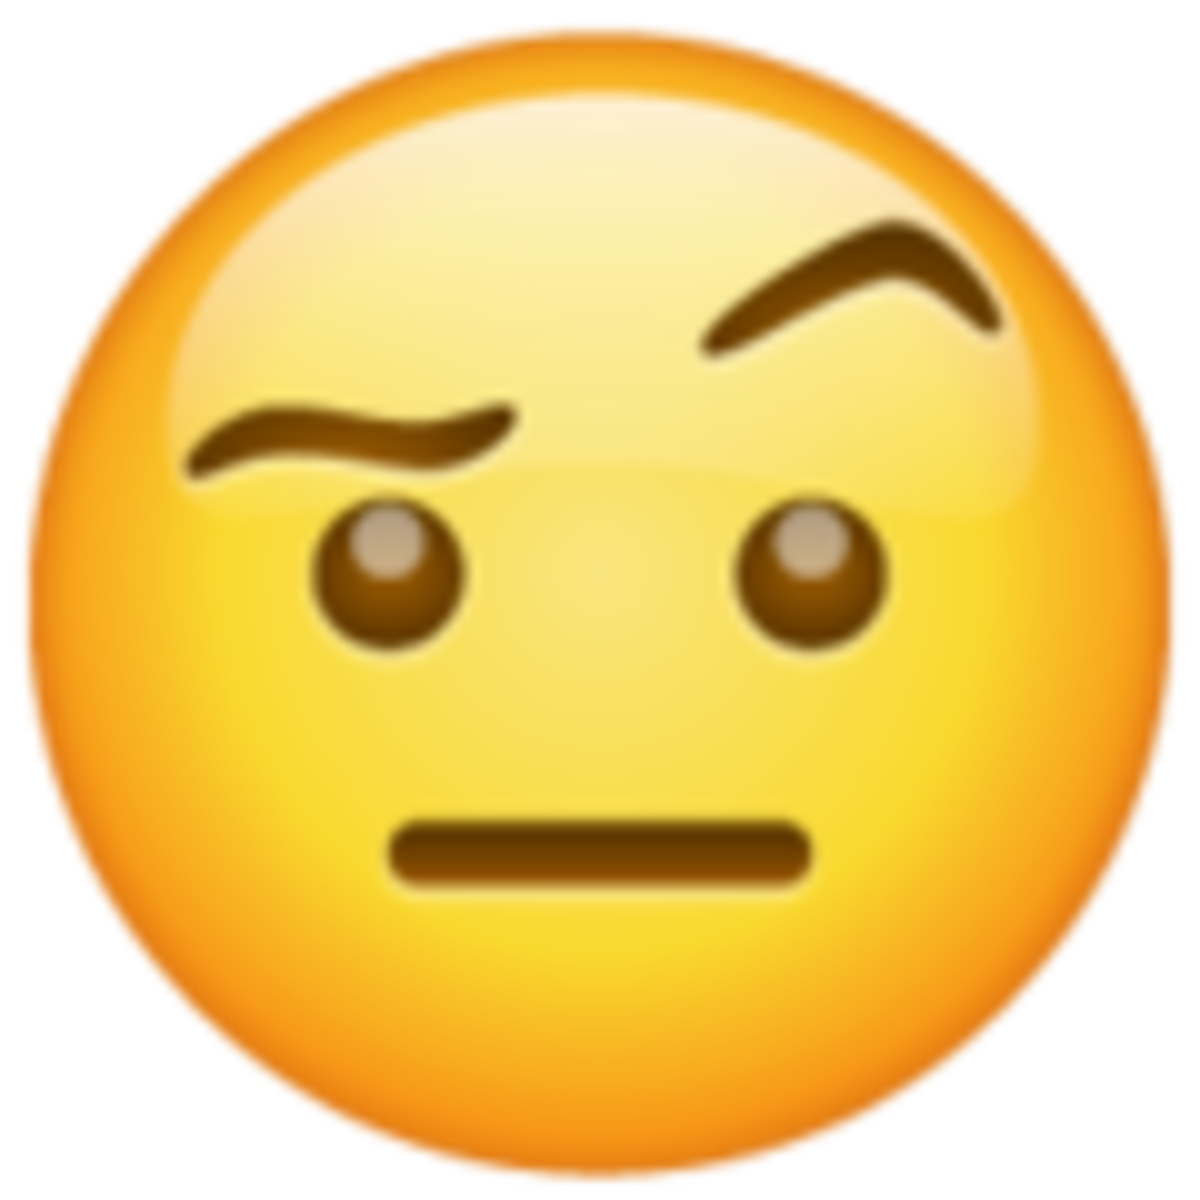 Emoji 1f928, cara con ceja levantada